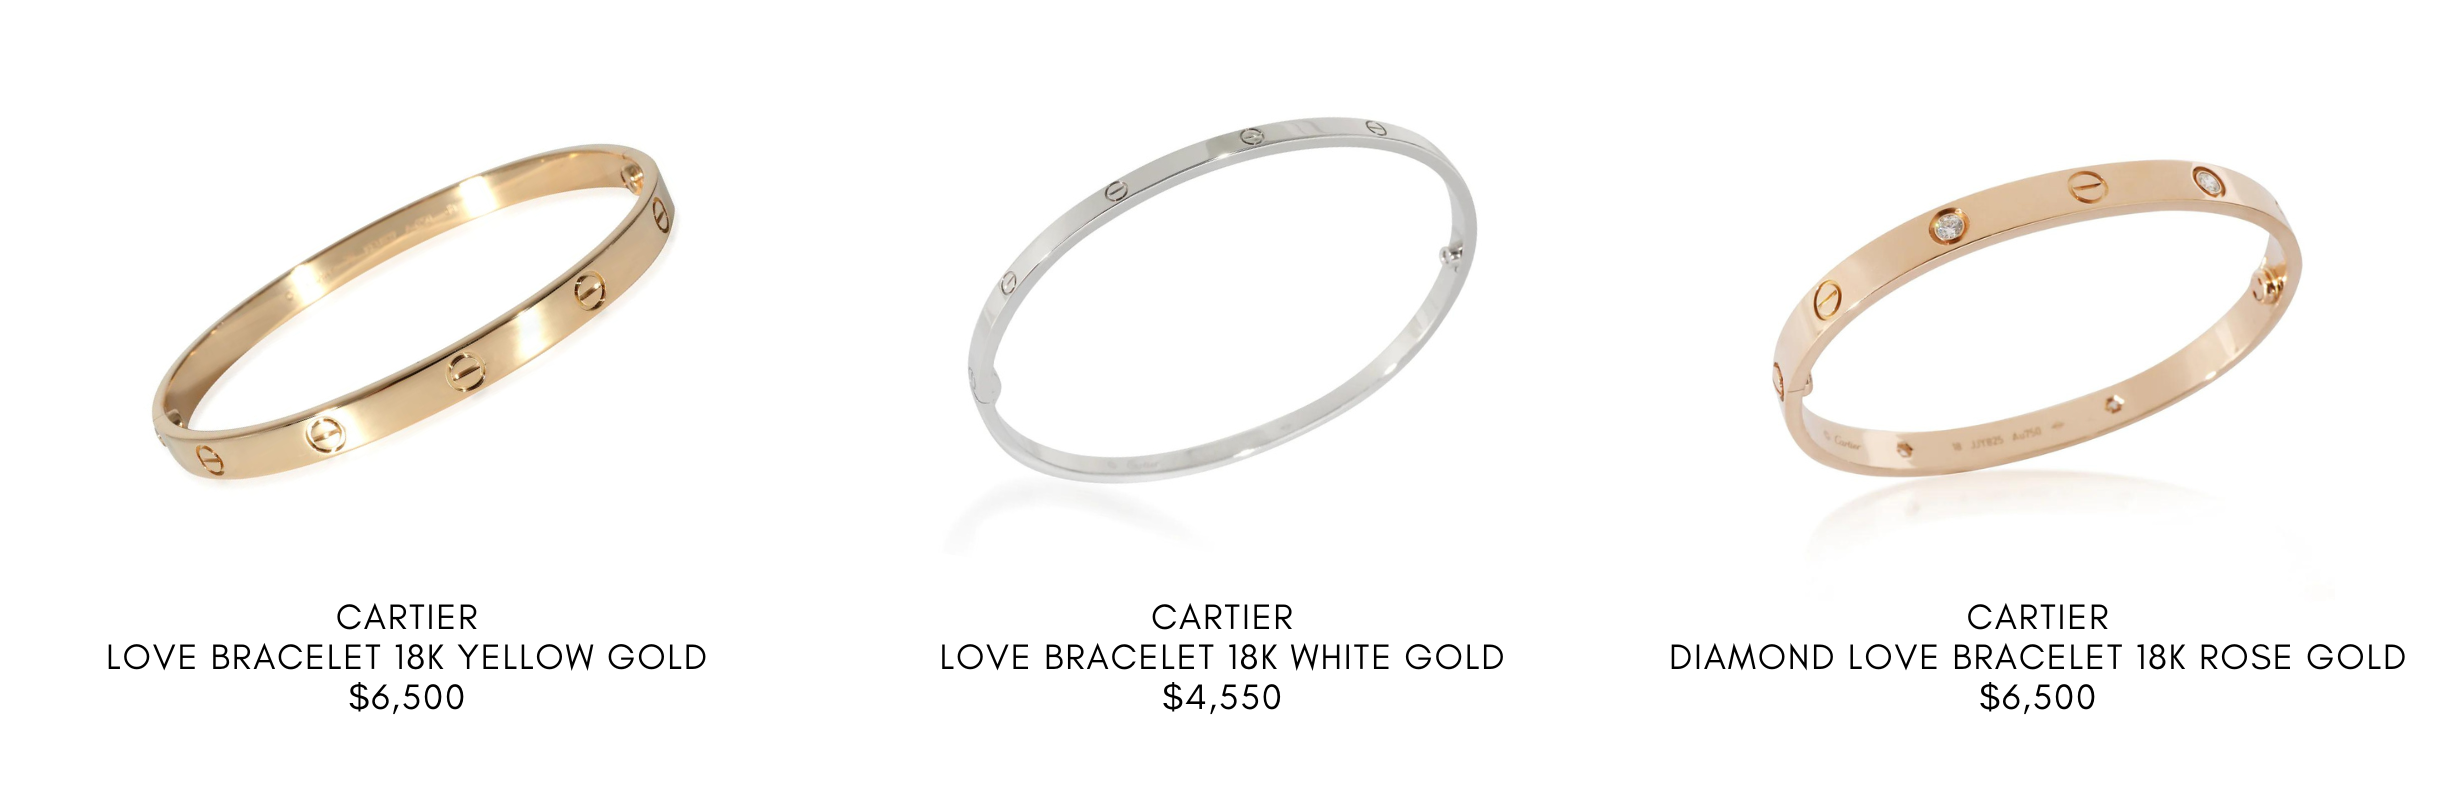 Cartier Love Bracelet Sm Yellow Gold